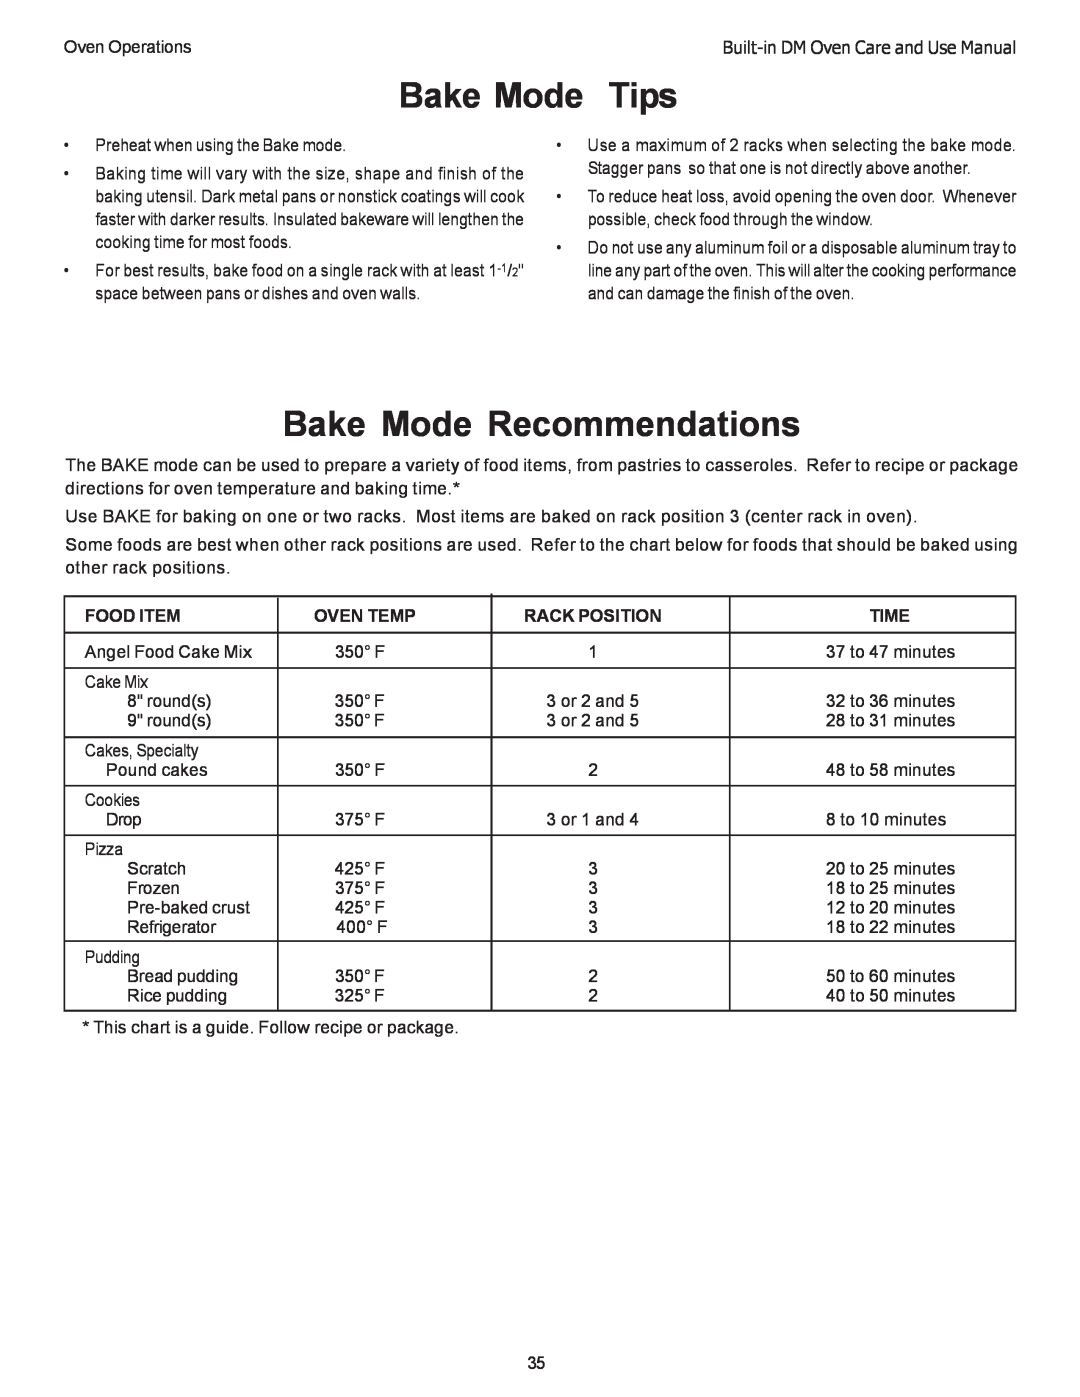 Thermador DM301, DM302 manual Bake Mode Tips, Bake Mode Recommendations 